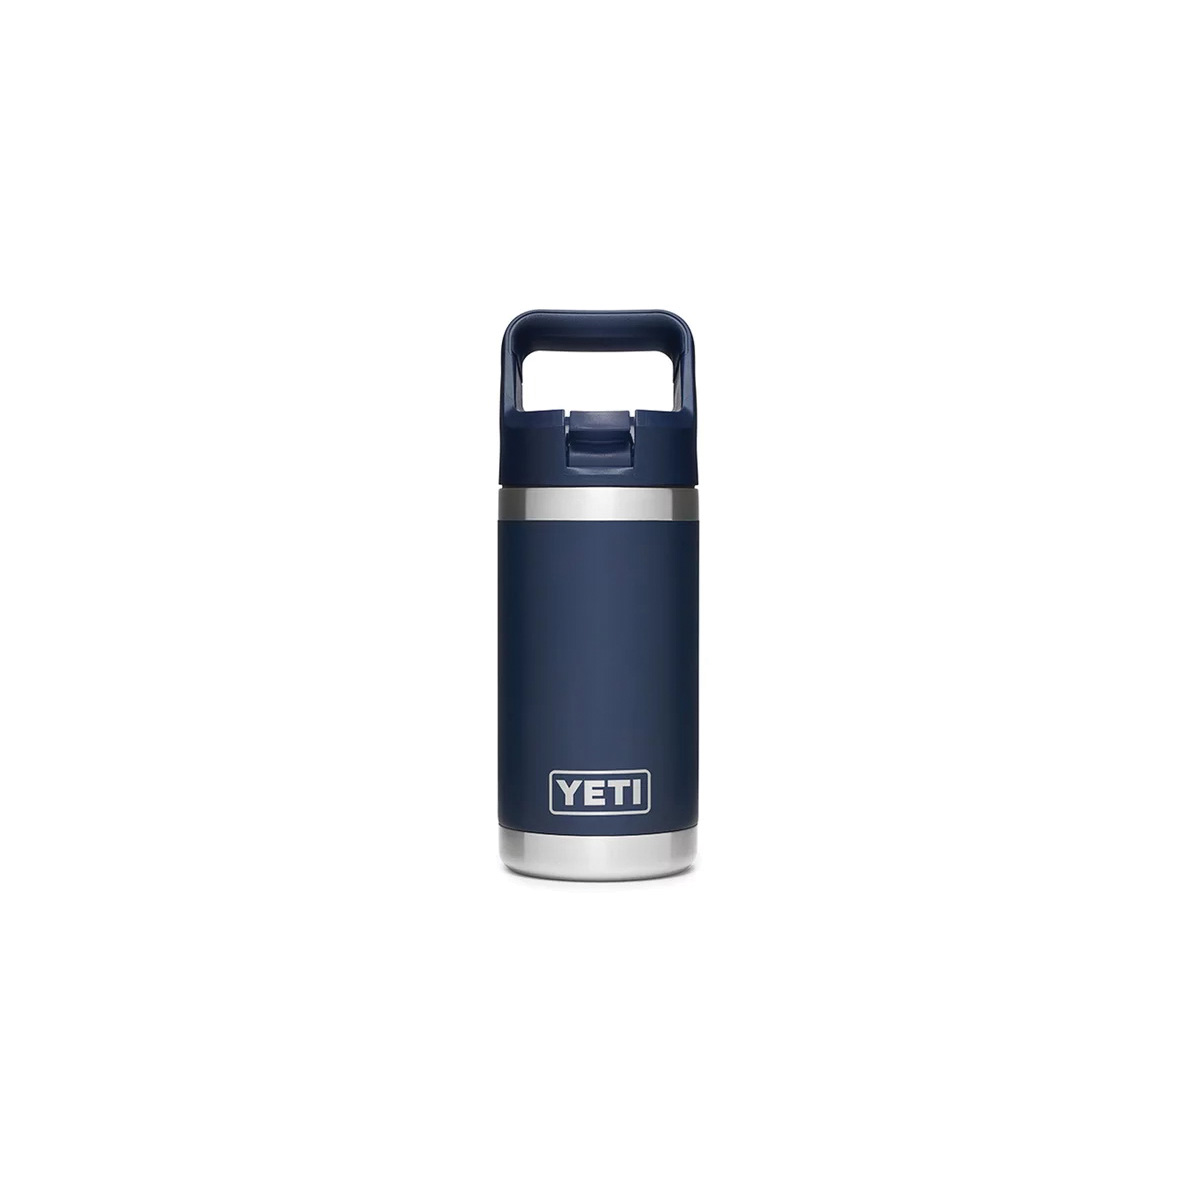 Yeti Rambler Jr 21071500110 Jr. Kid's Water Bottle, 12 oz Capacity, Stainless Steel, Navy - 3